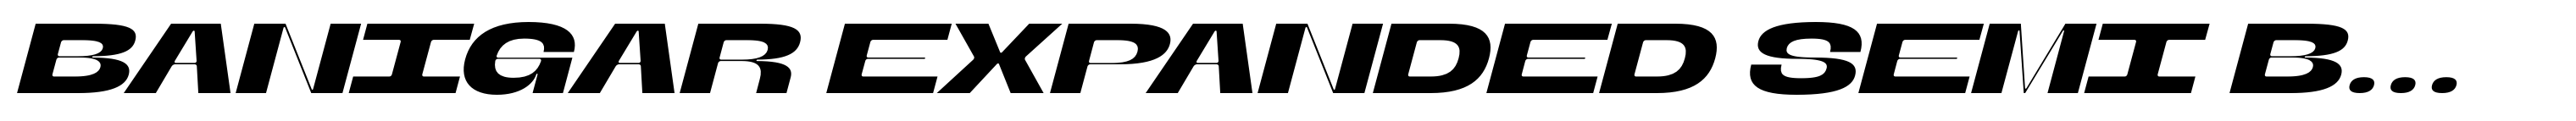 Banigar Expanded Semi Bold Italic